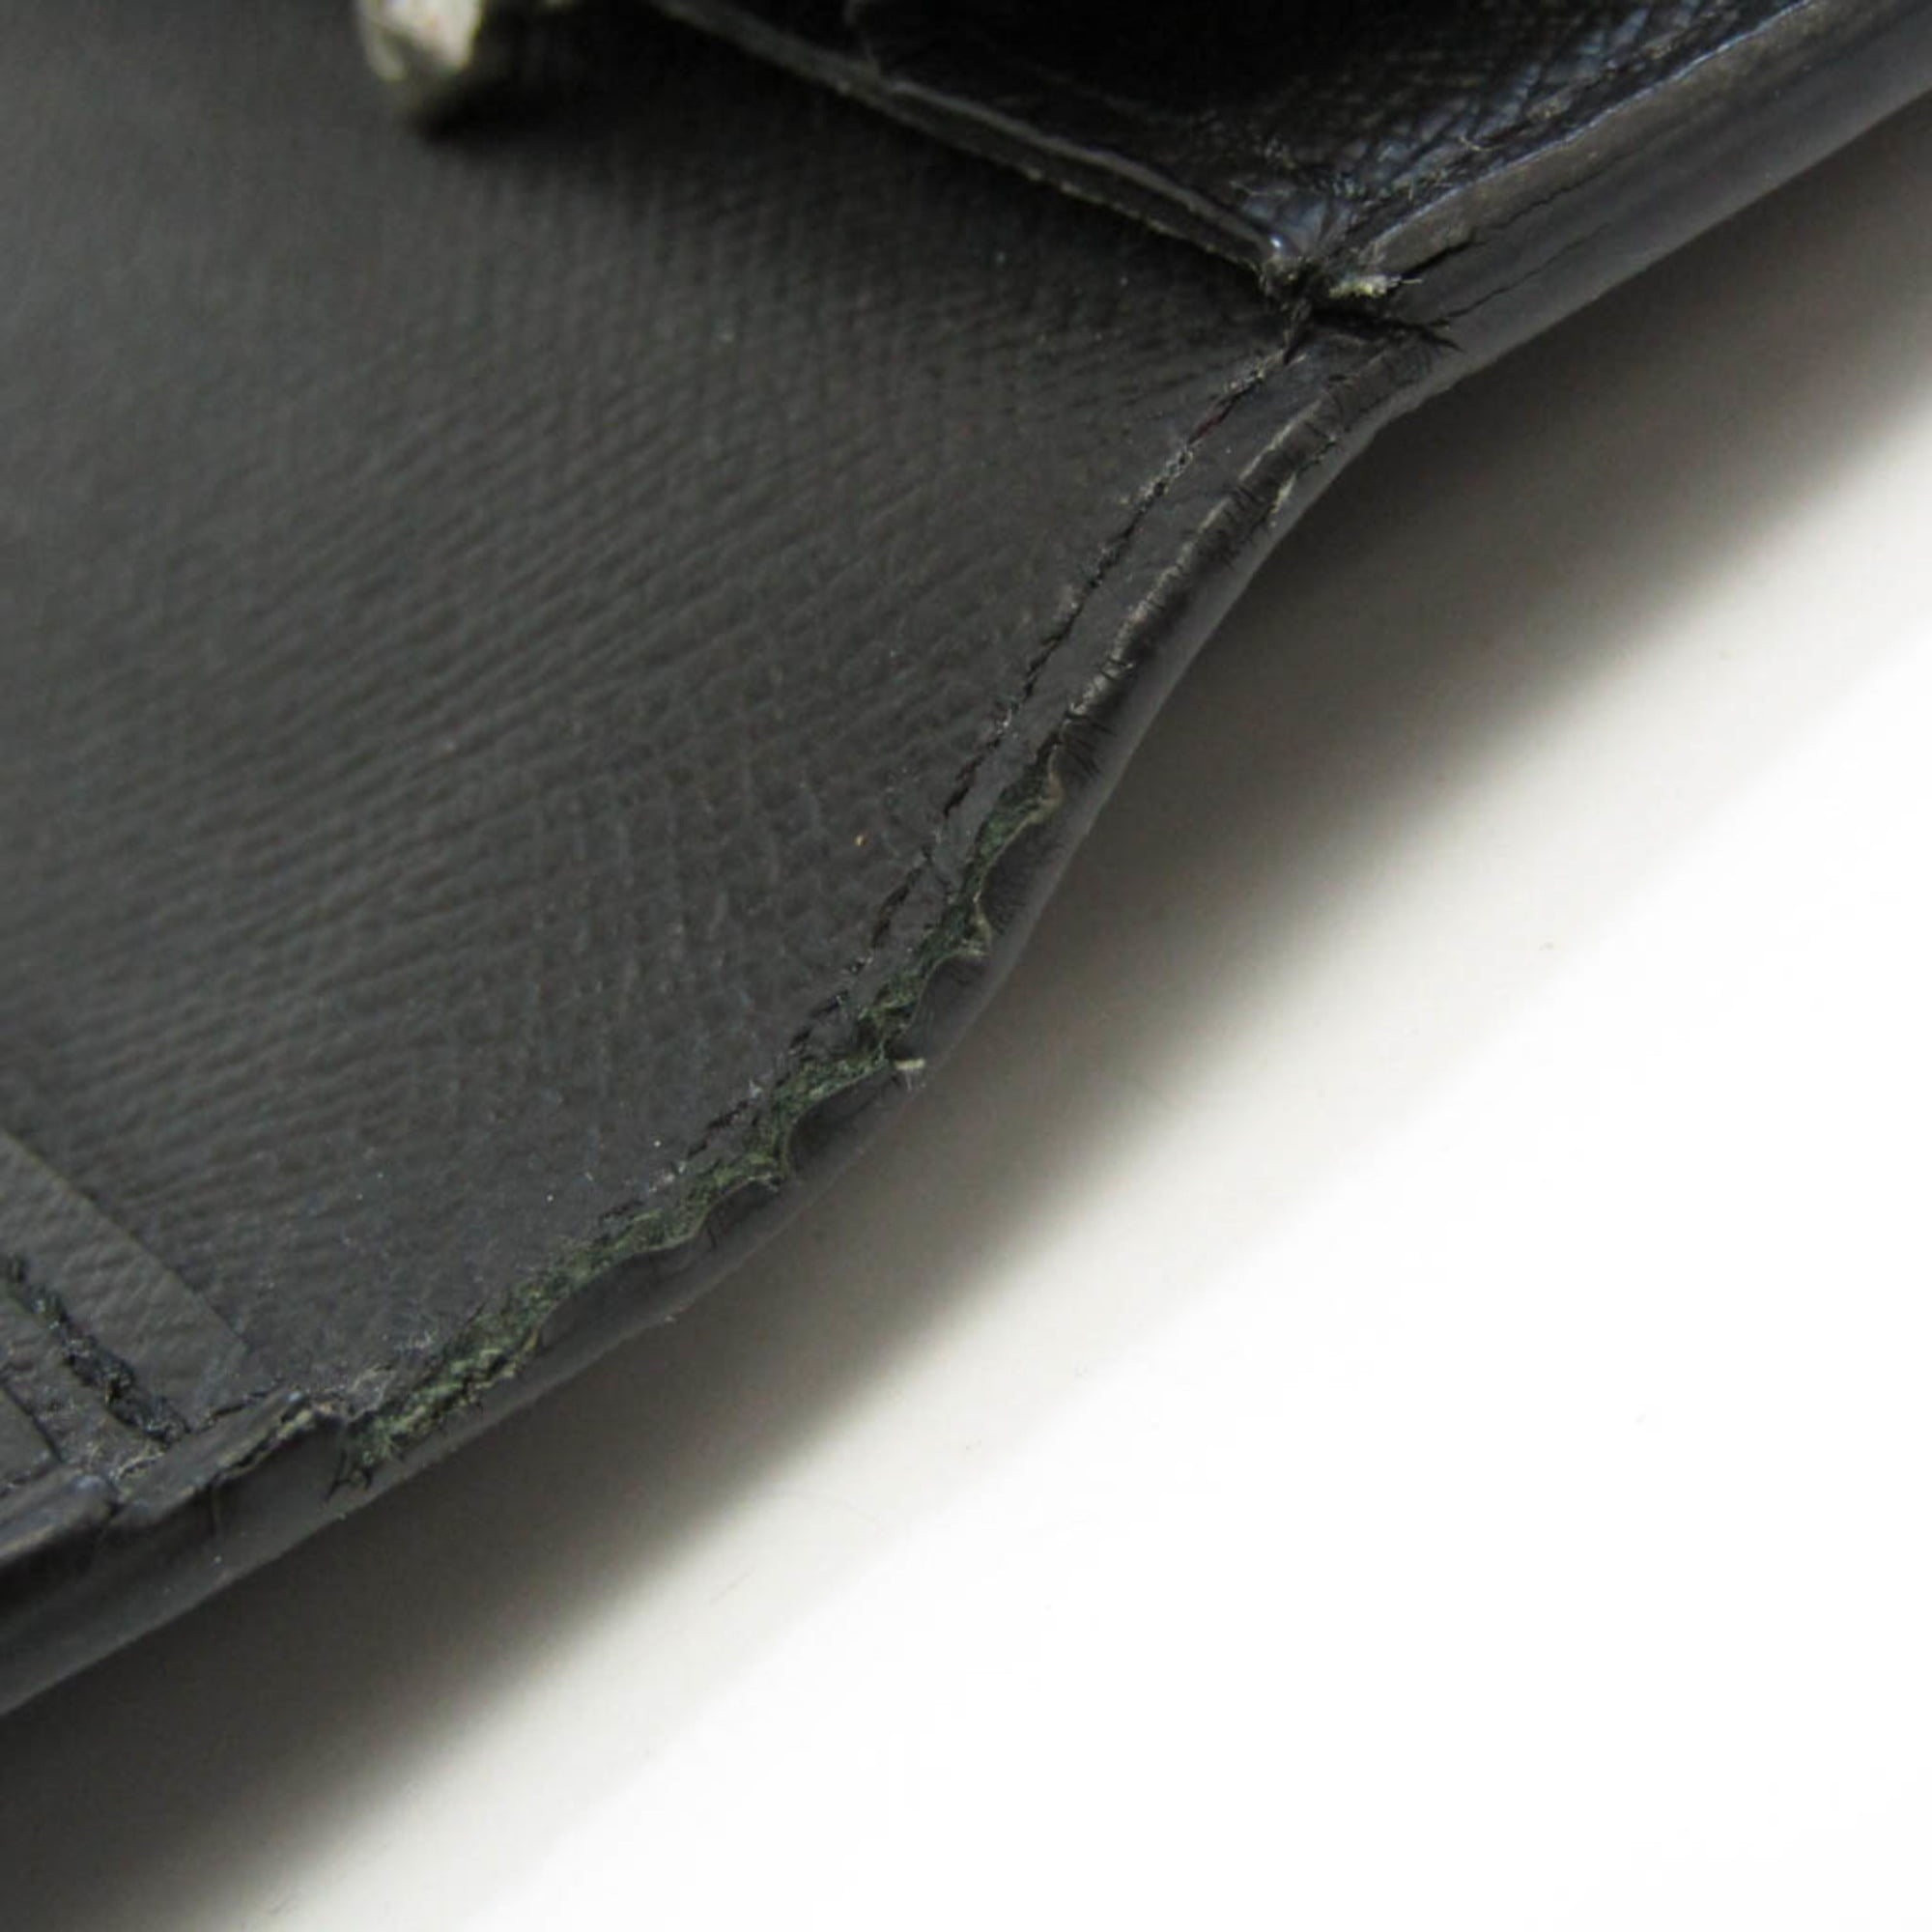 Louis Vuitton - Black Taiga Leather Bifold Credit Card - Catawiki